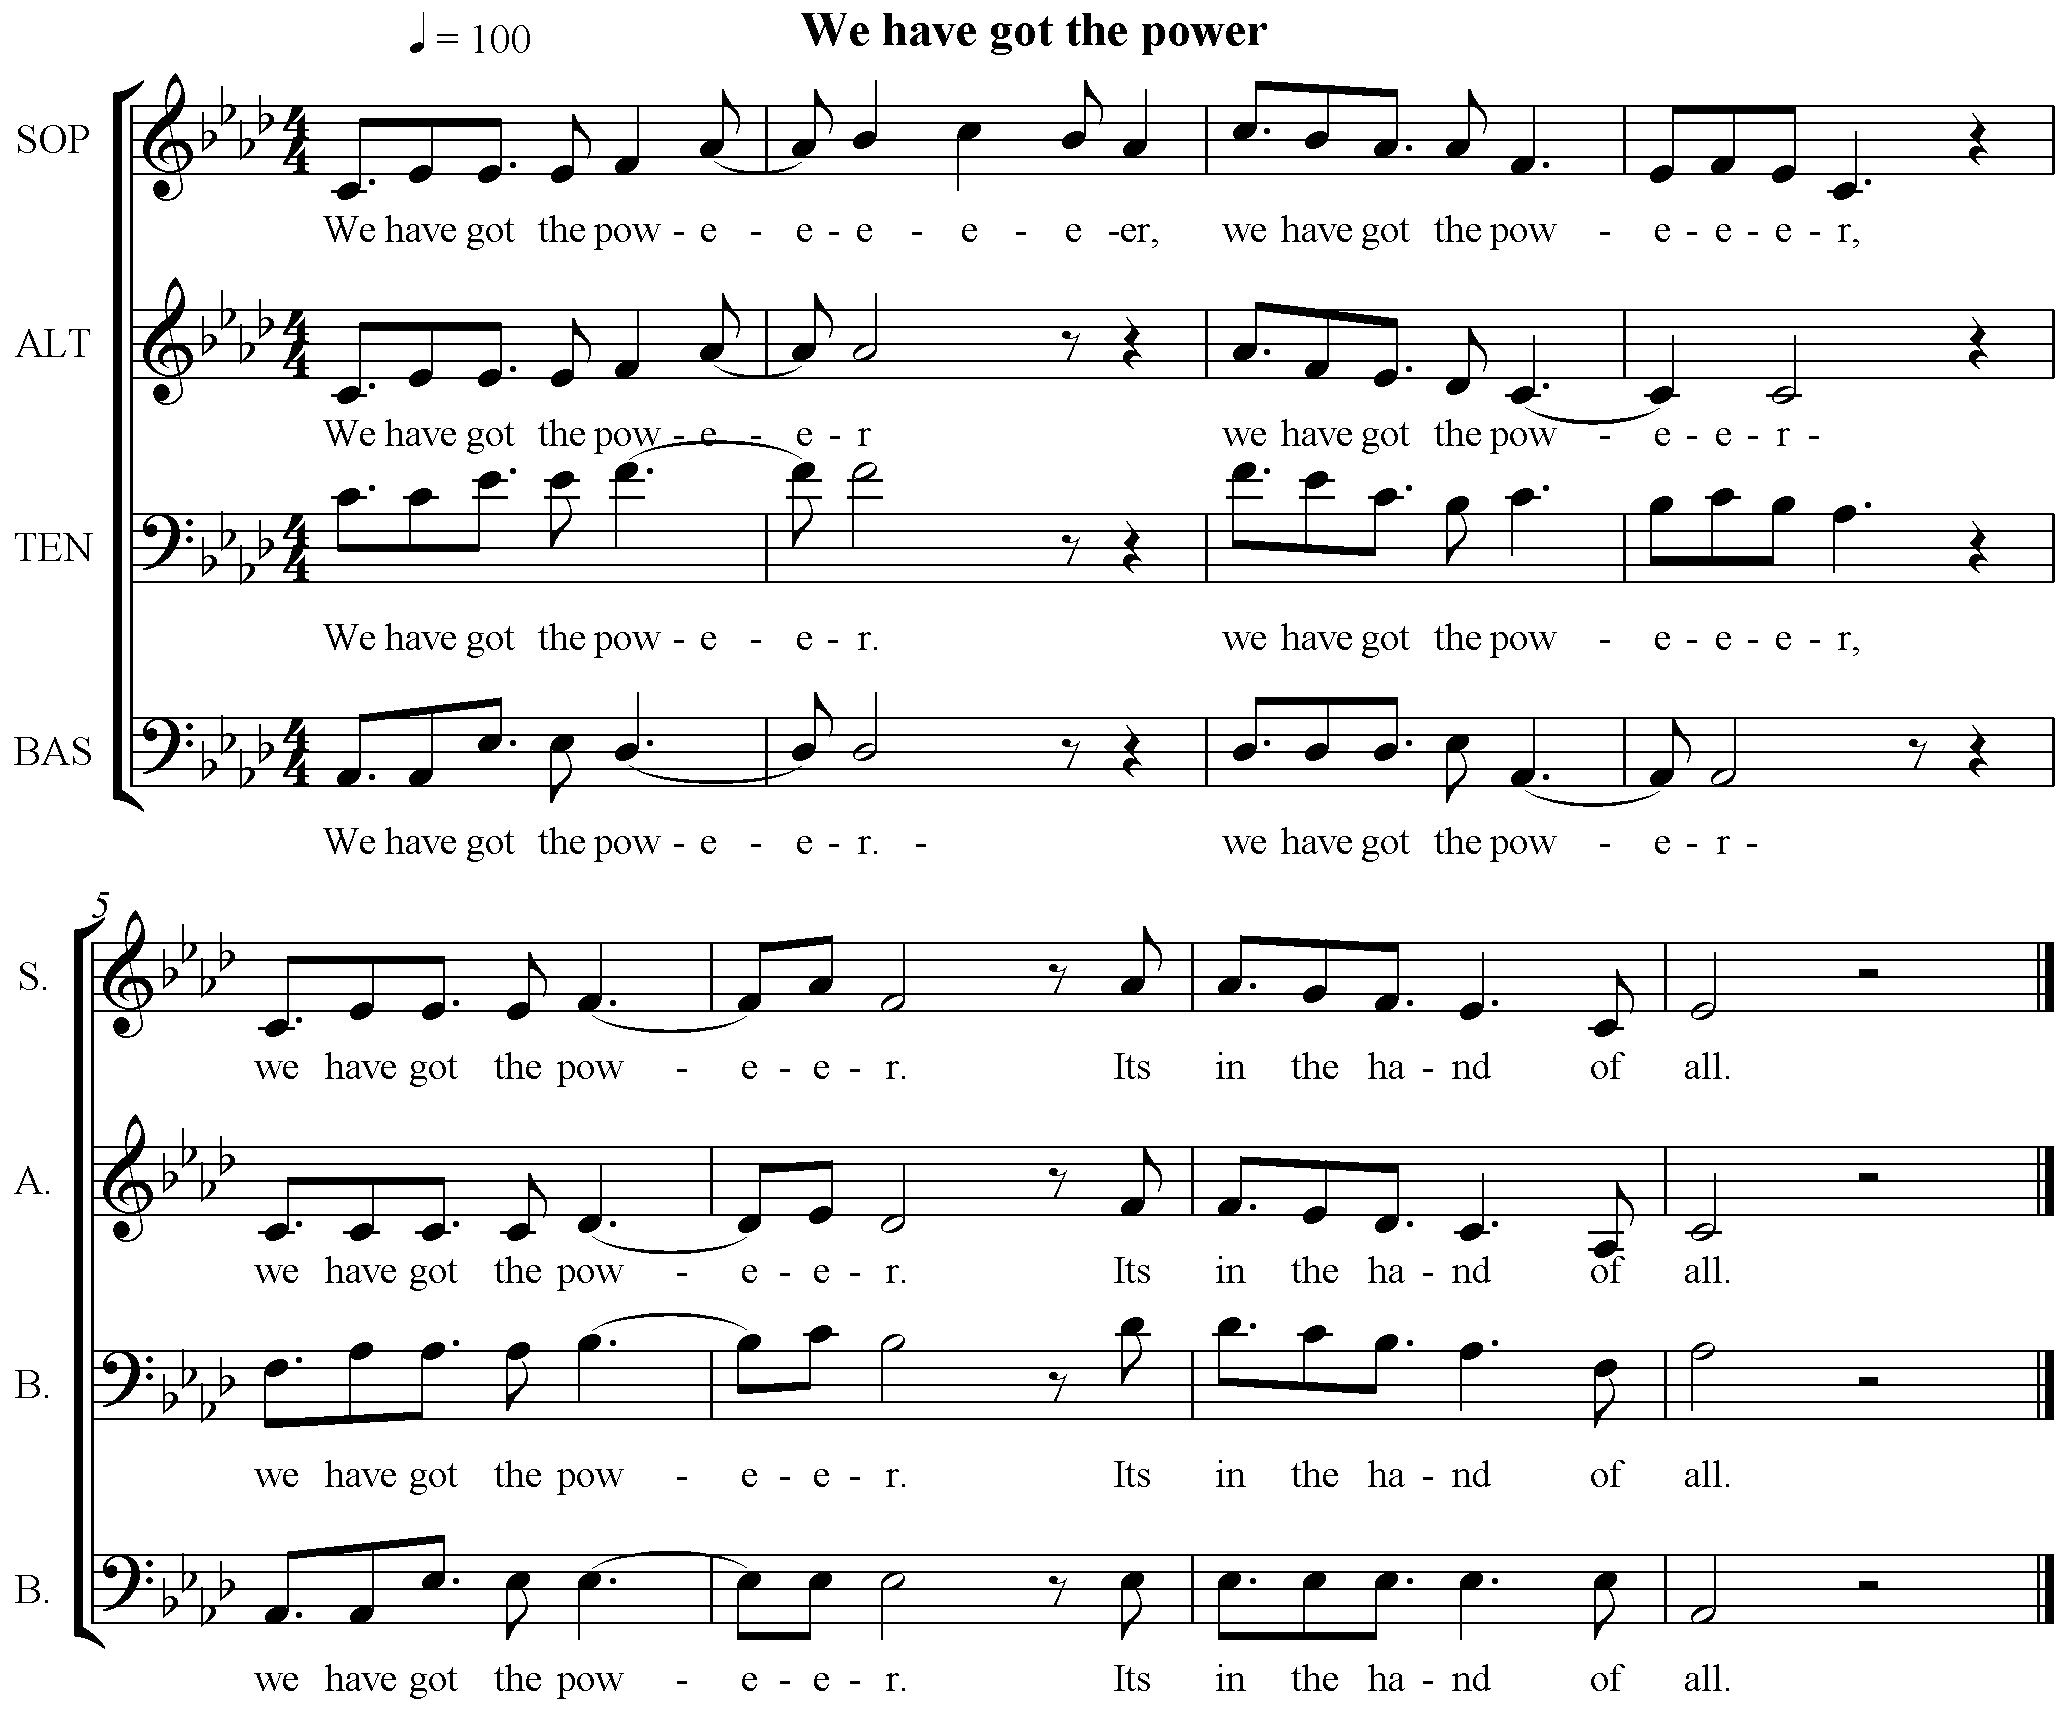 Sha trop jolie (vazohh pas beau) - song and lyrics by MAPESS